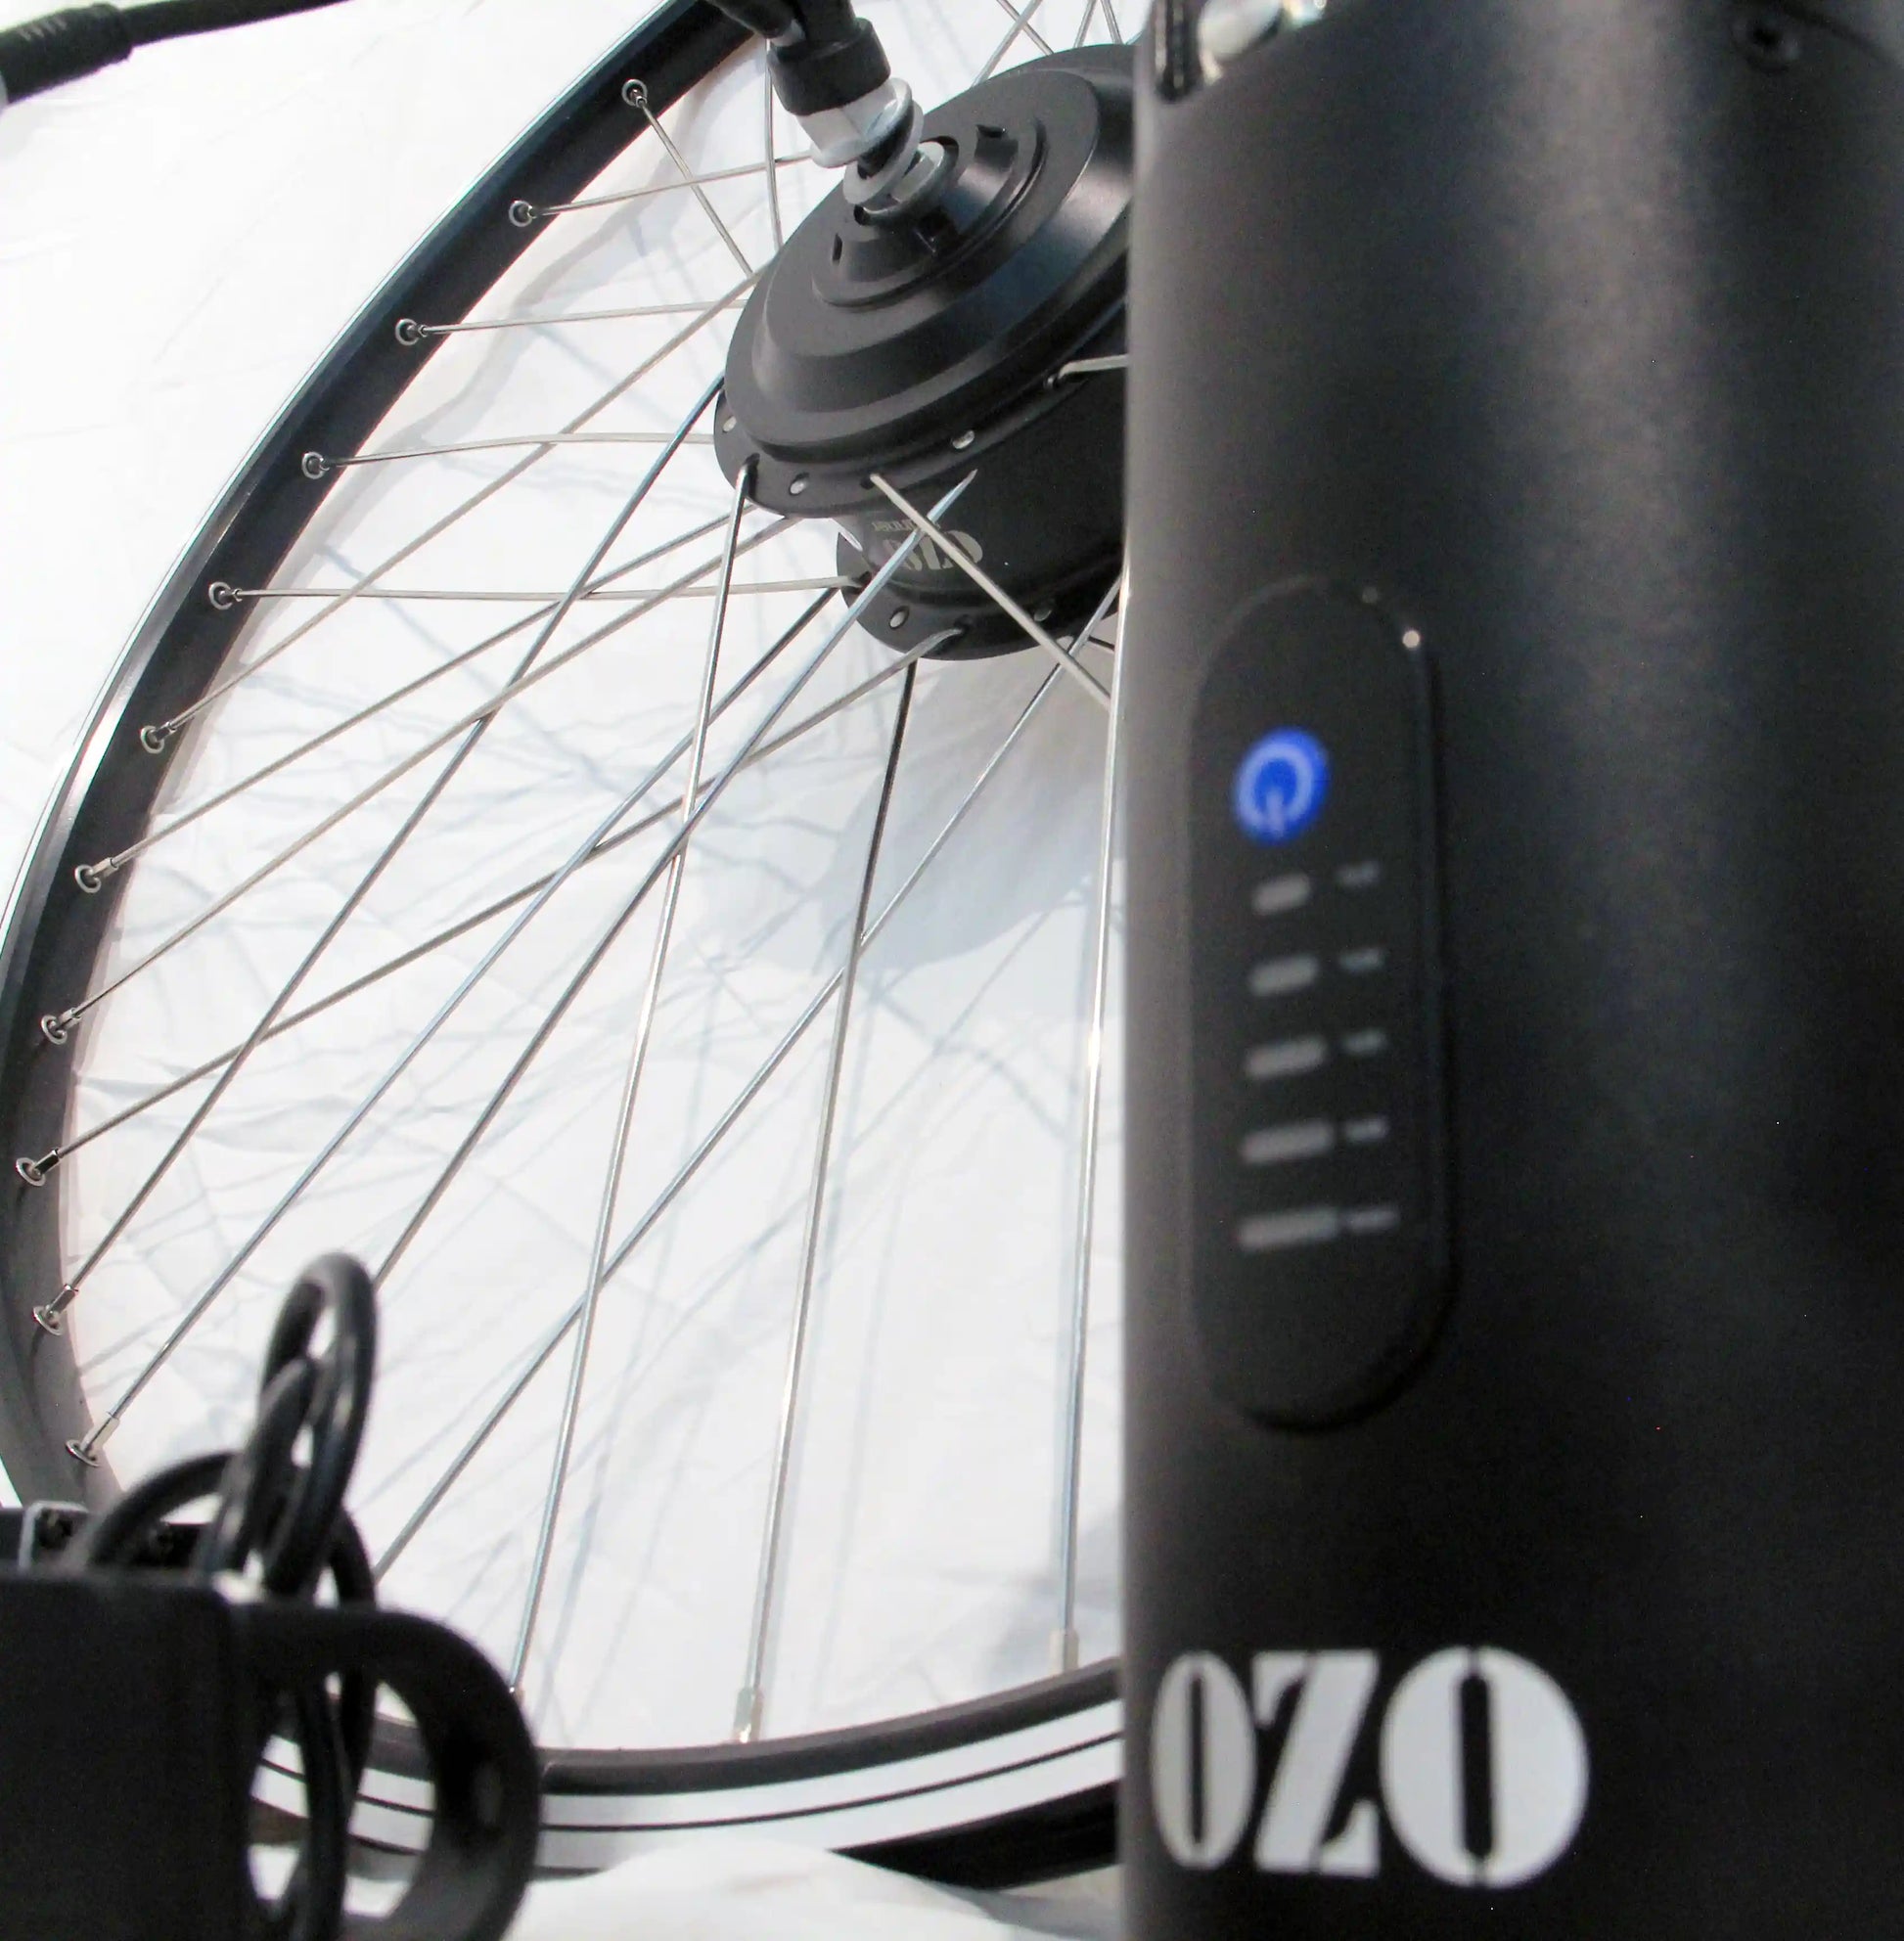 Kit motor para bicicleta eléctrica 29” rueda trasera tipo cassette